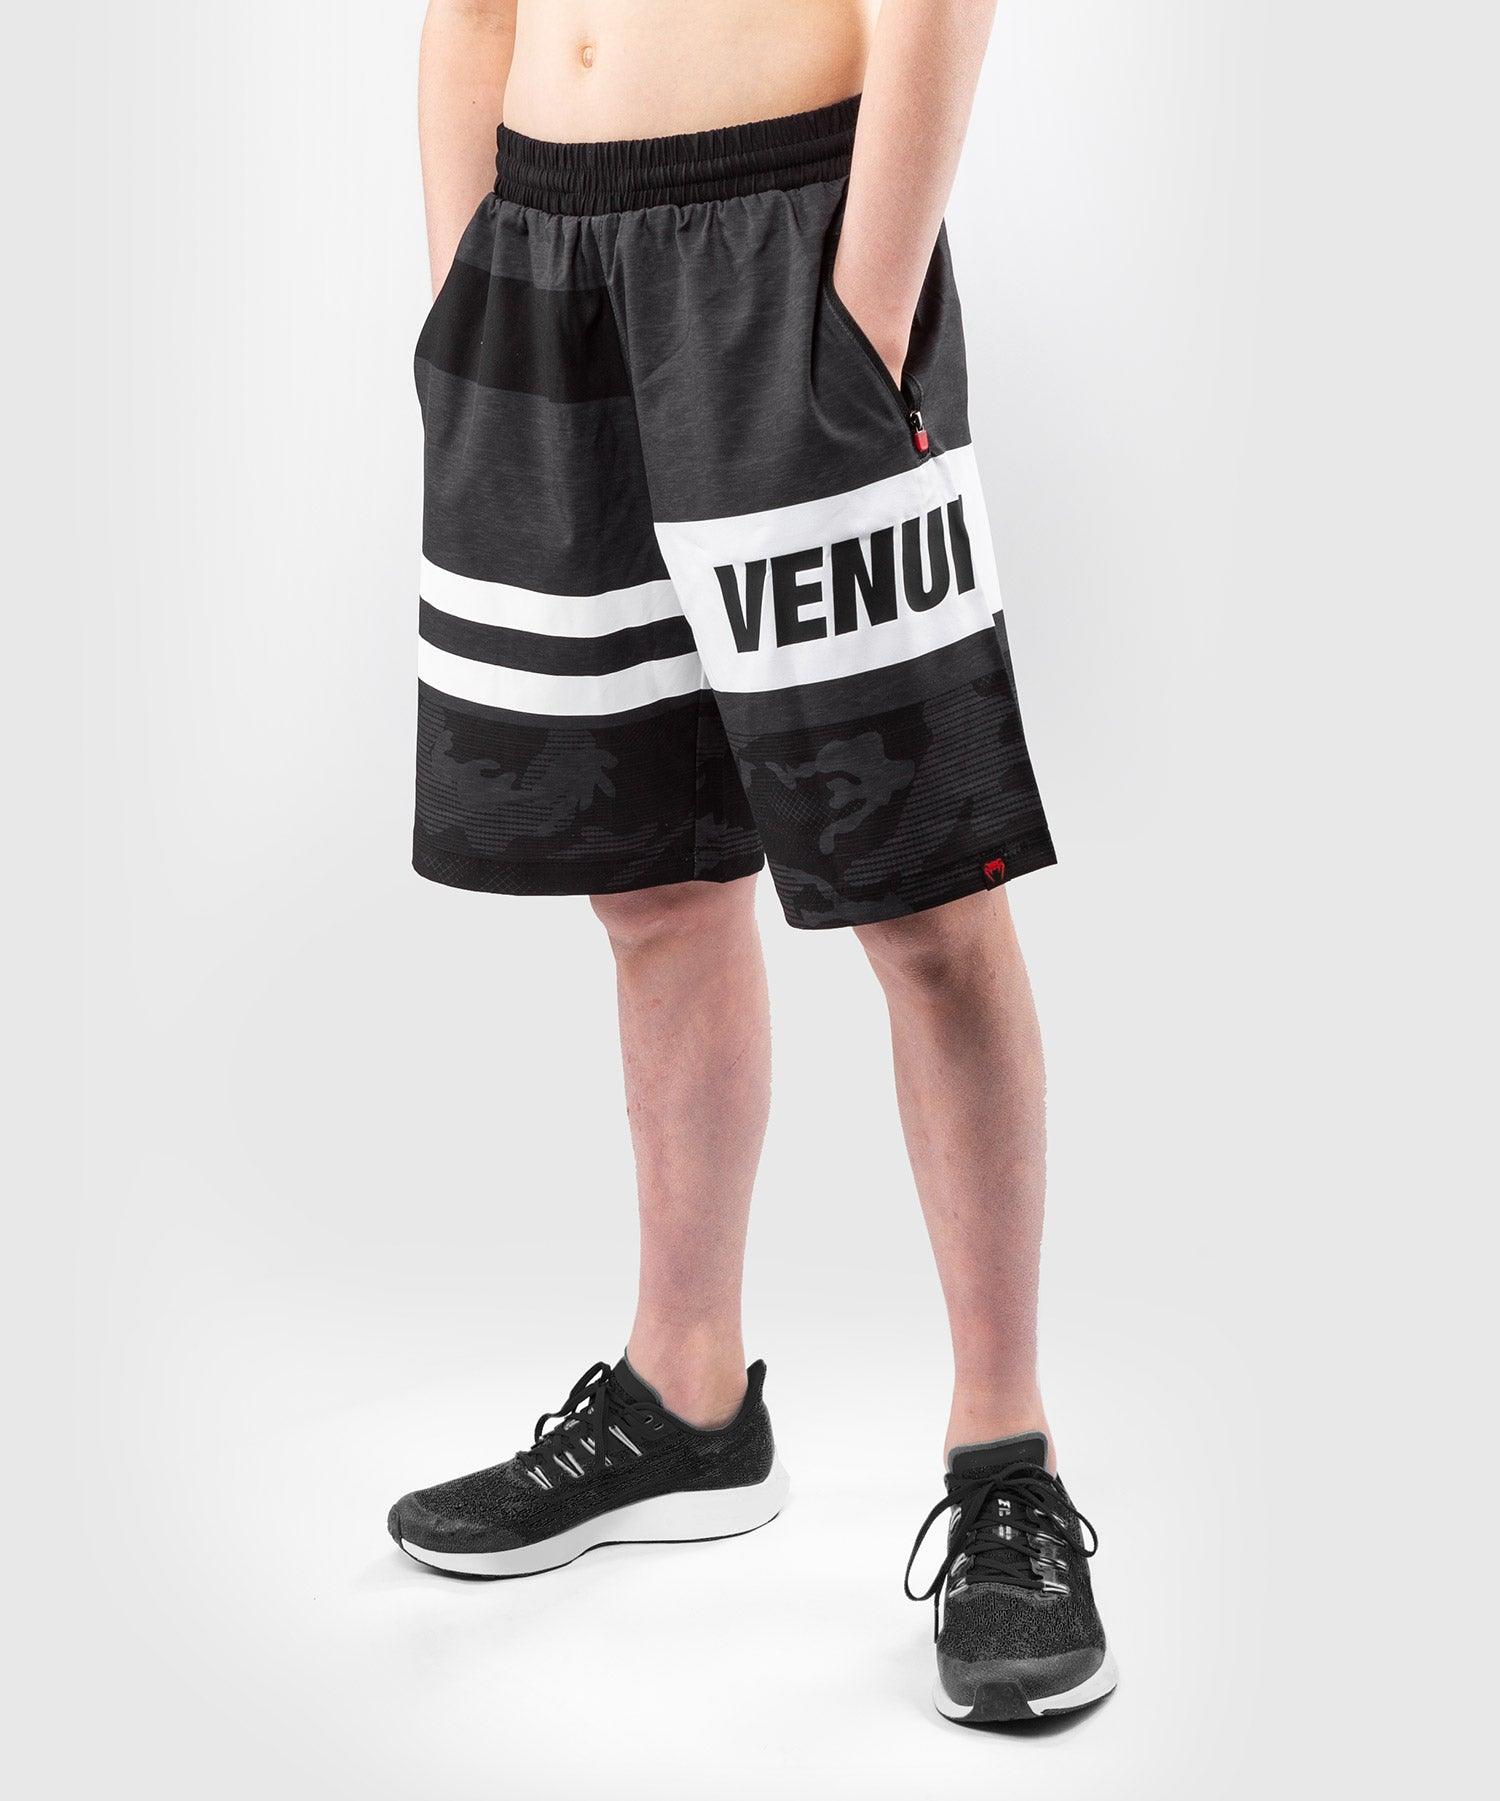 Venum Bandit training shorts - for kids - Black/Grey Picture 6